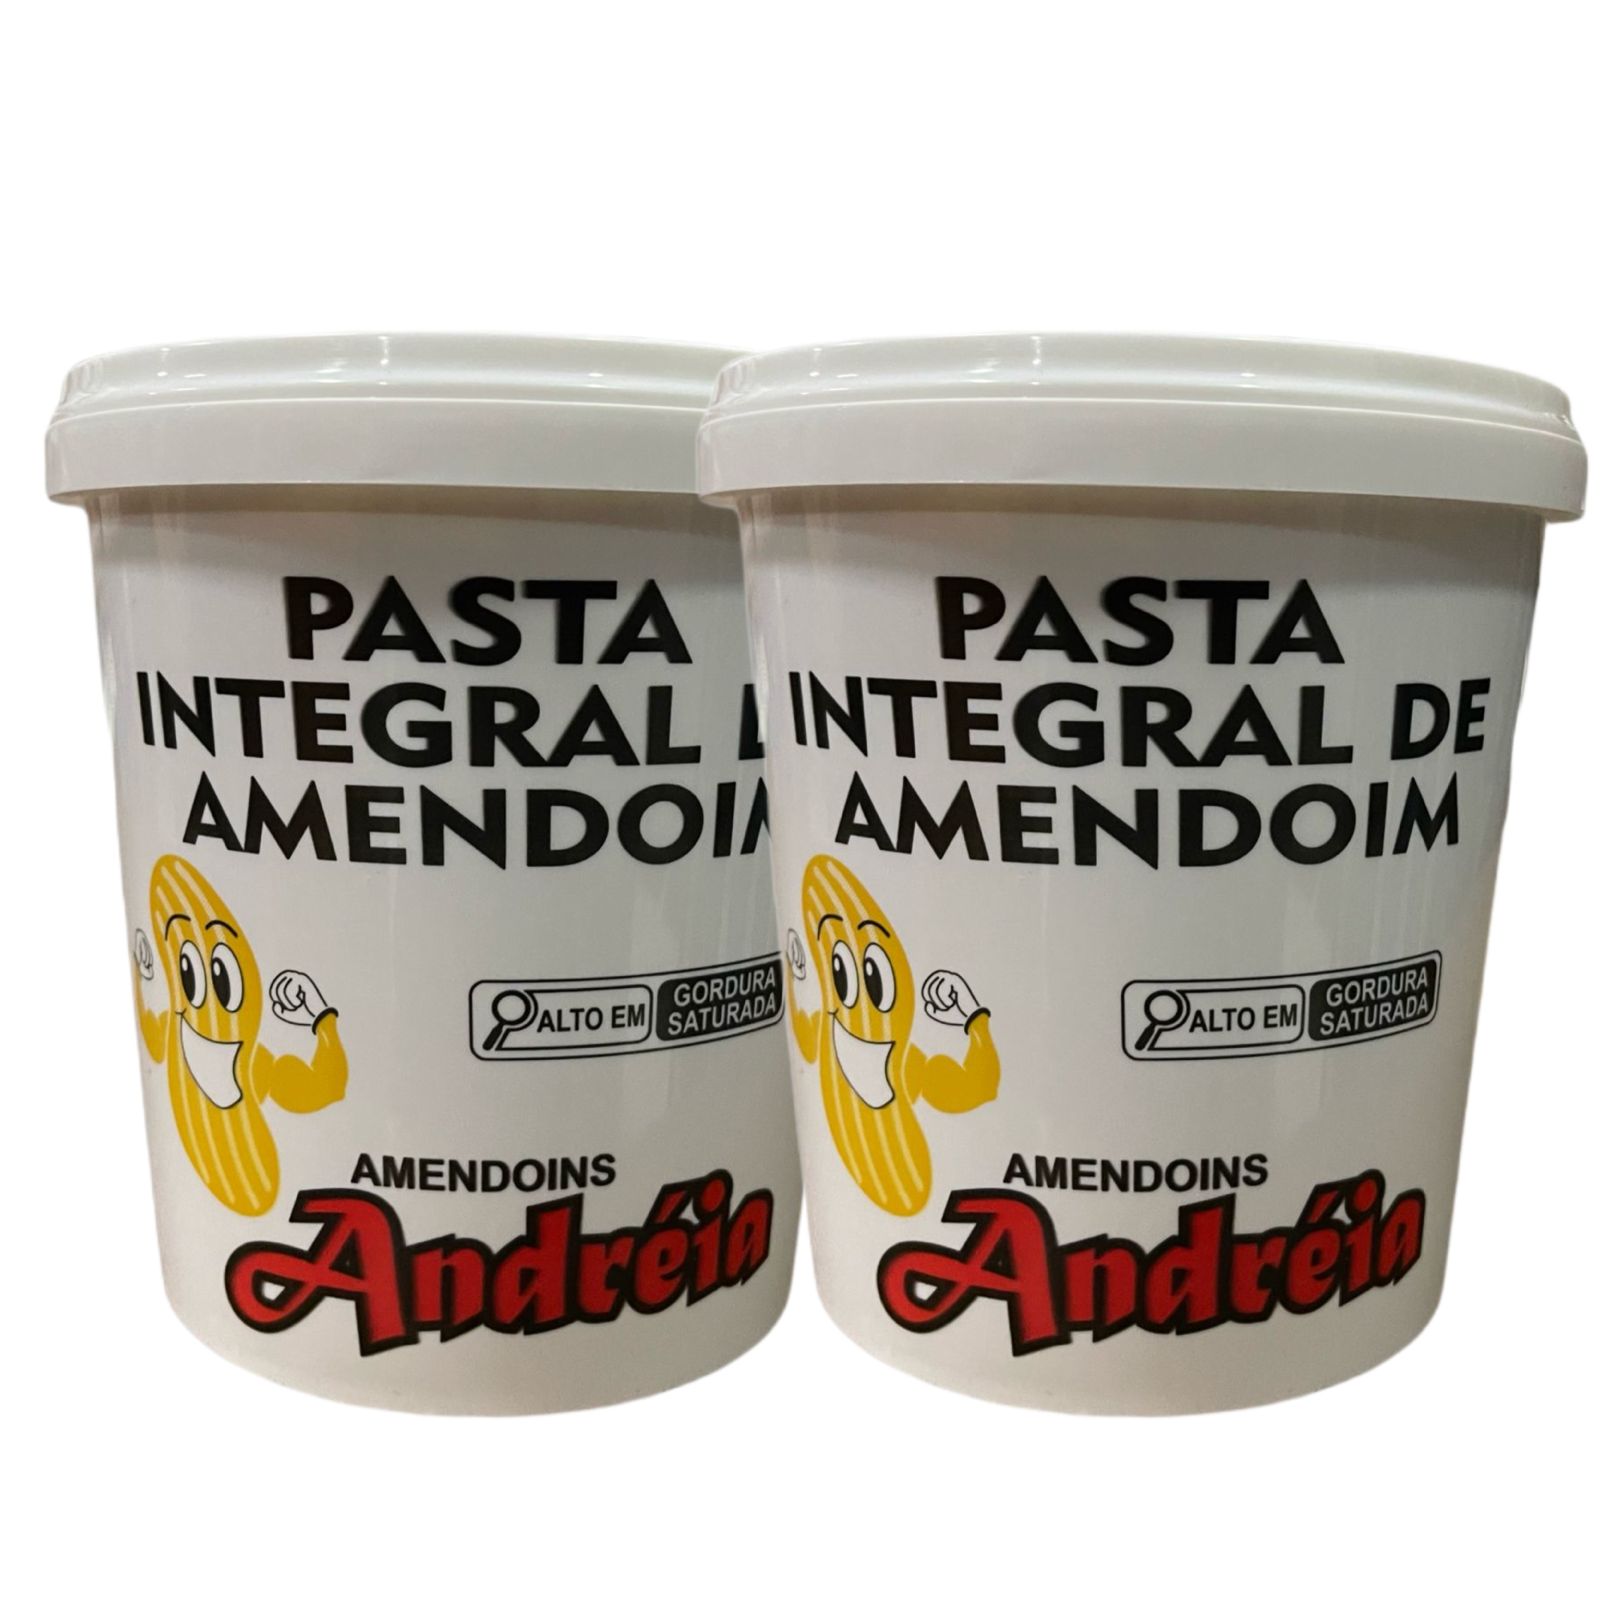 Pasta de Amendoim Integral (1 Kg) - Mandubim - Mandubim